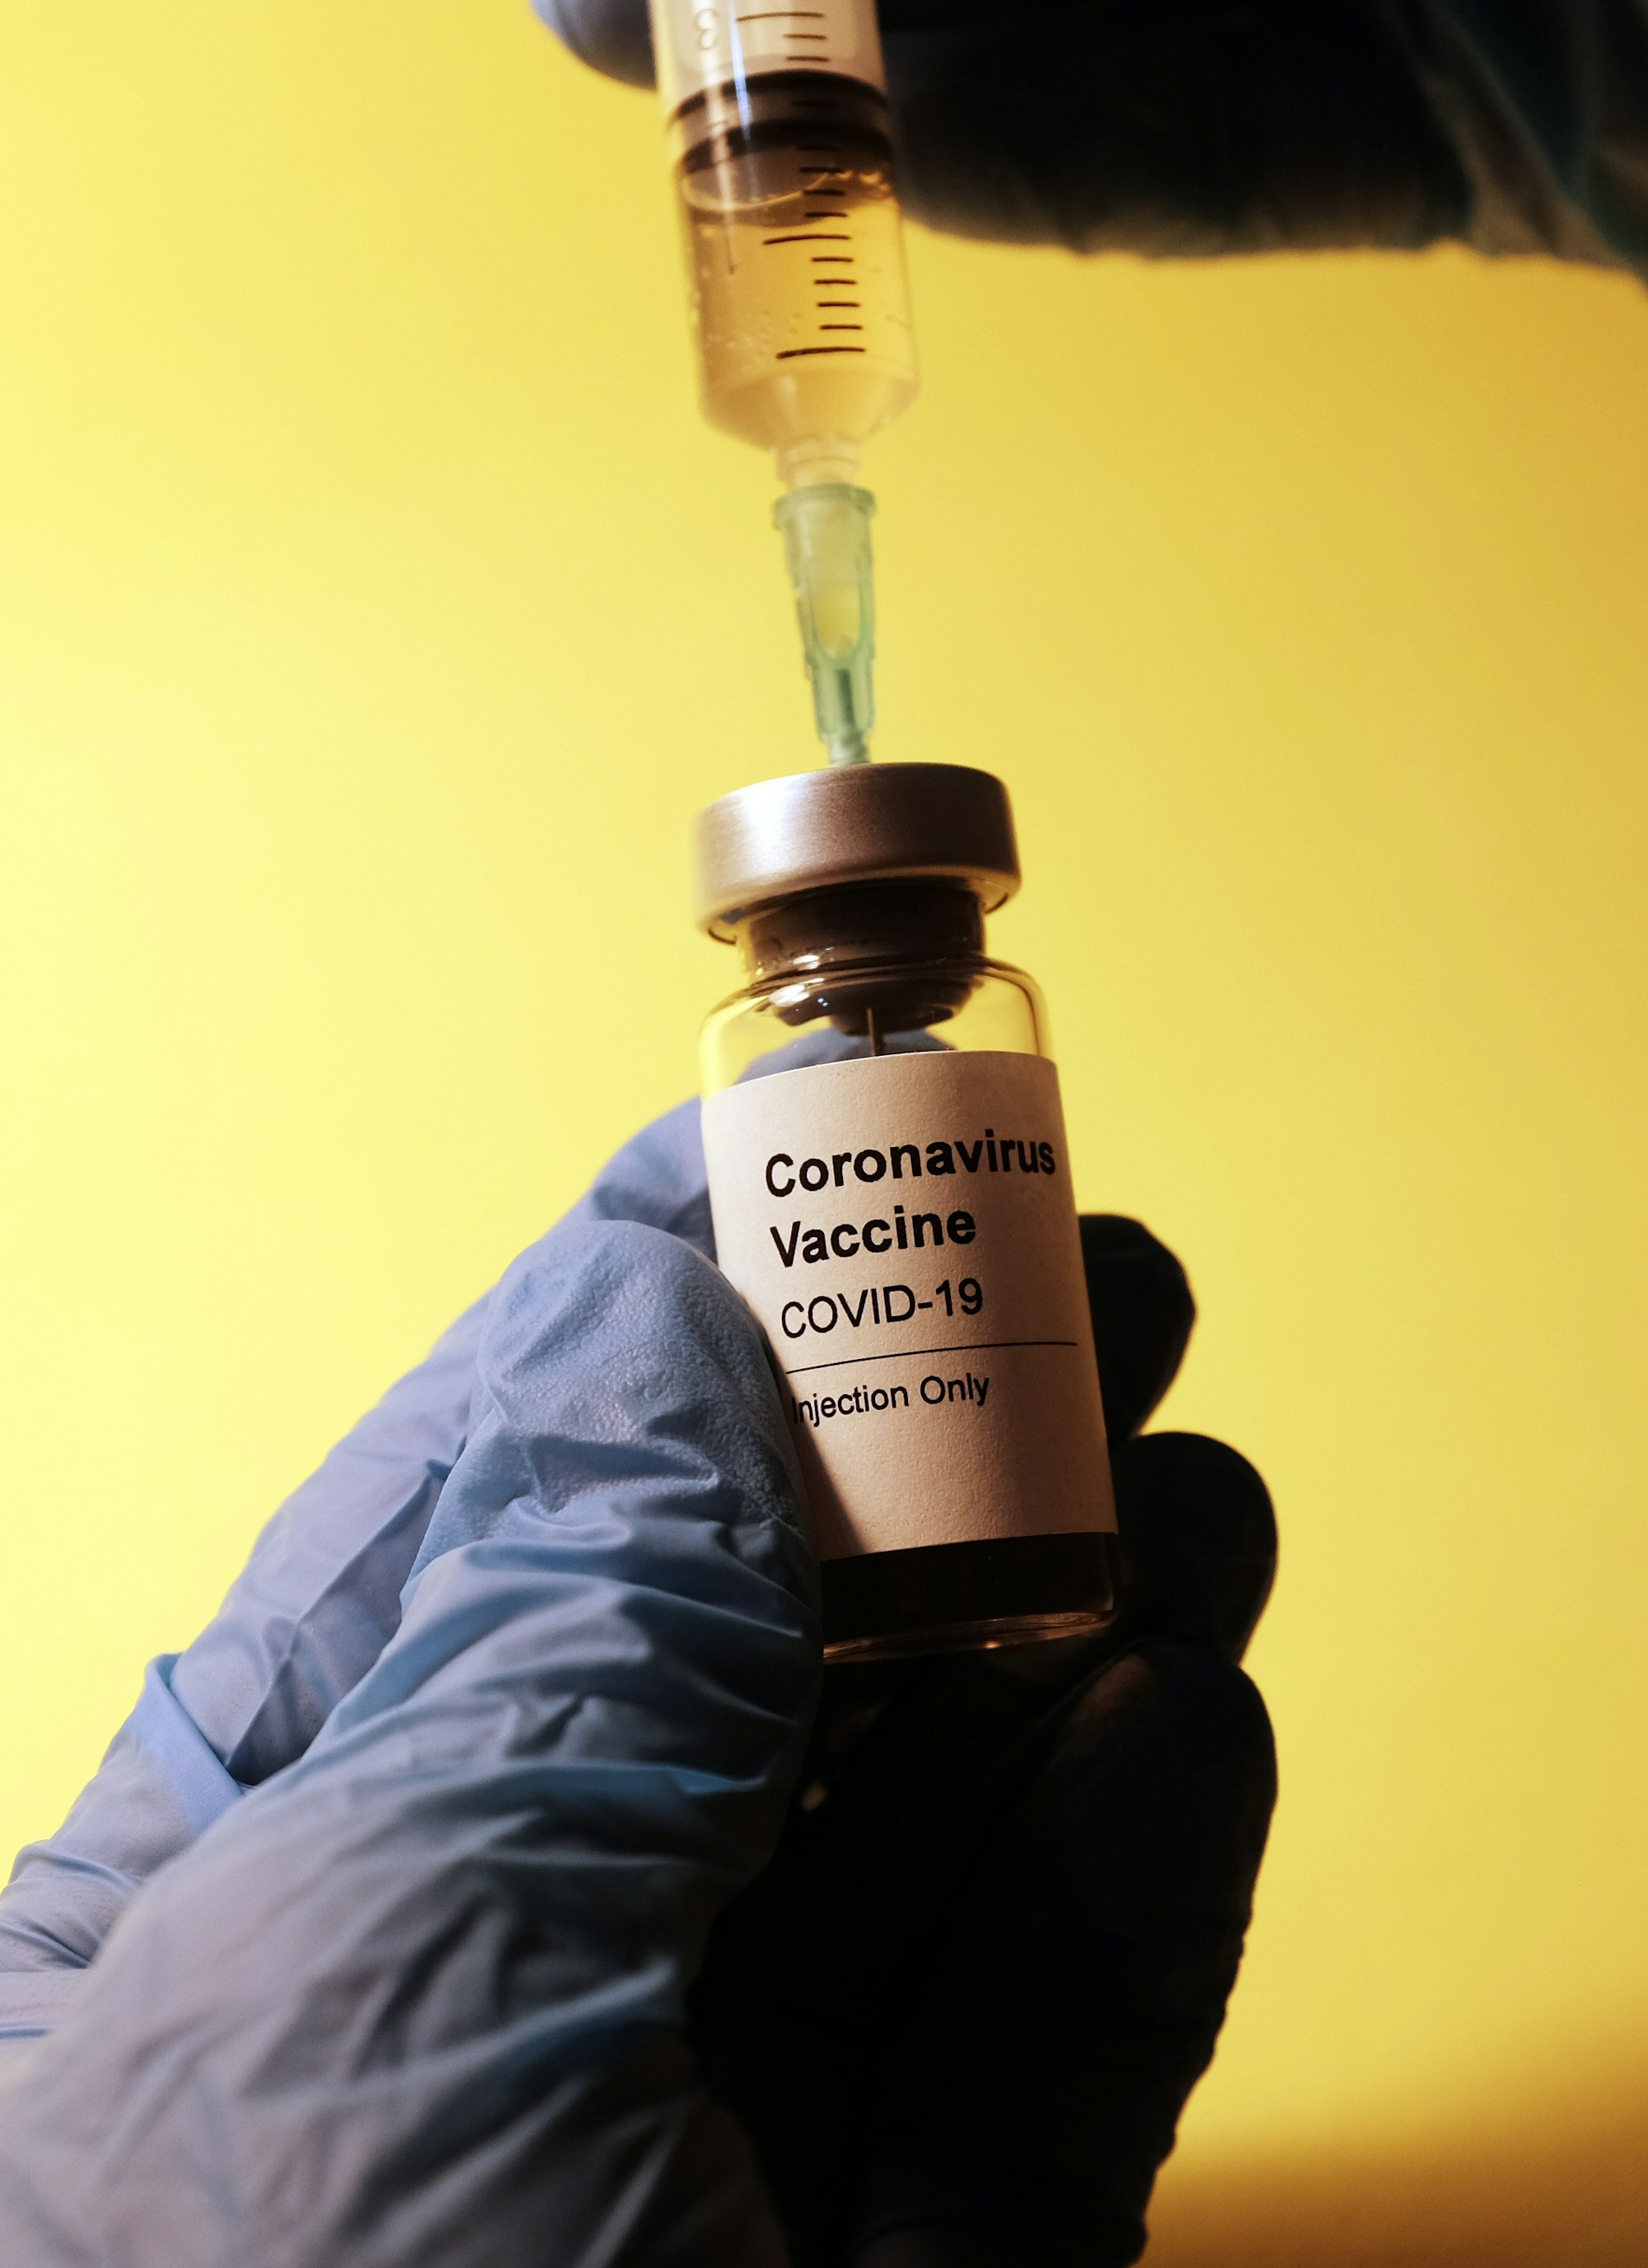 covid-19 vaccine stock photo ig: @hakannural
